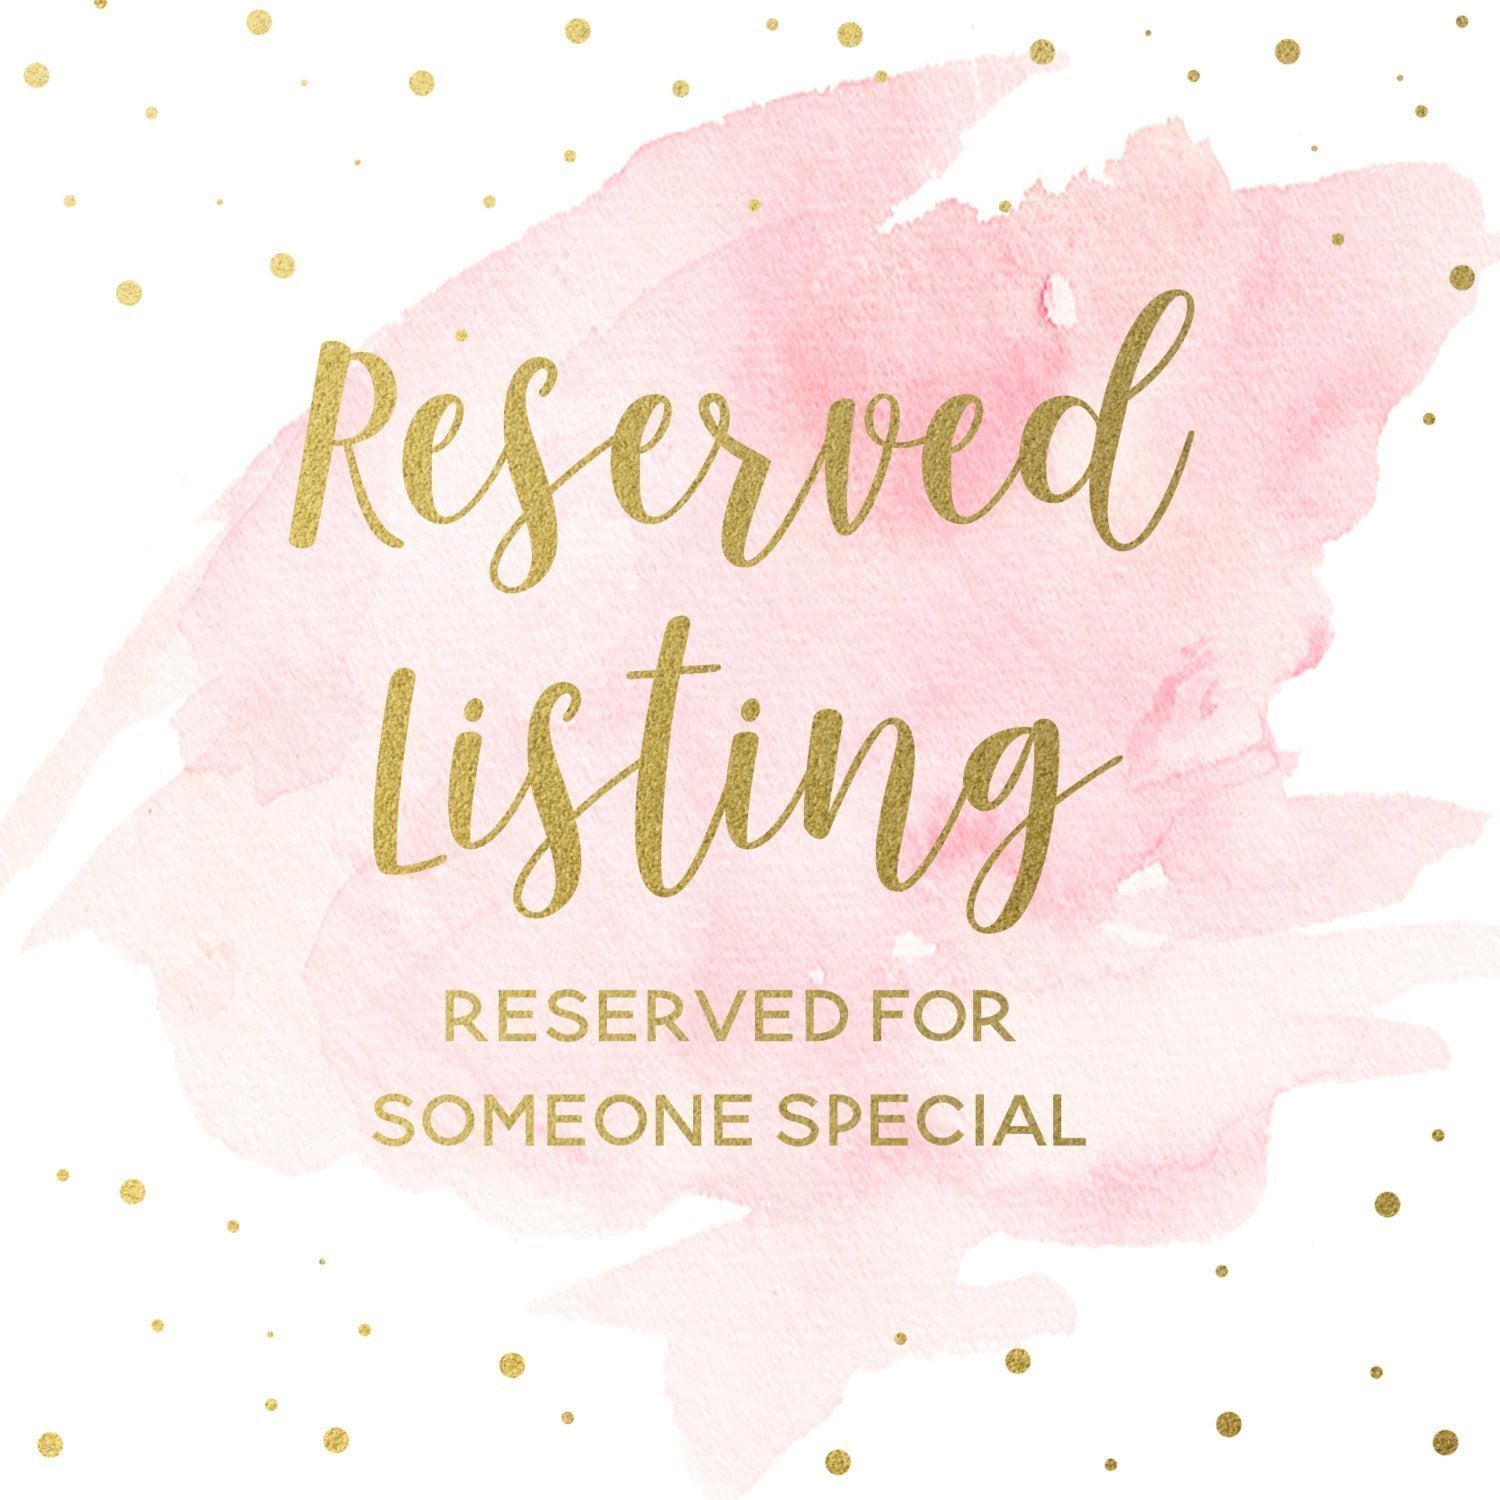 Reserved Listing - R Owen